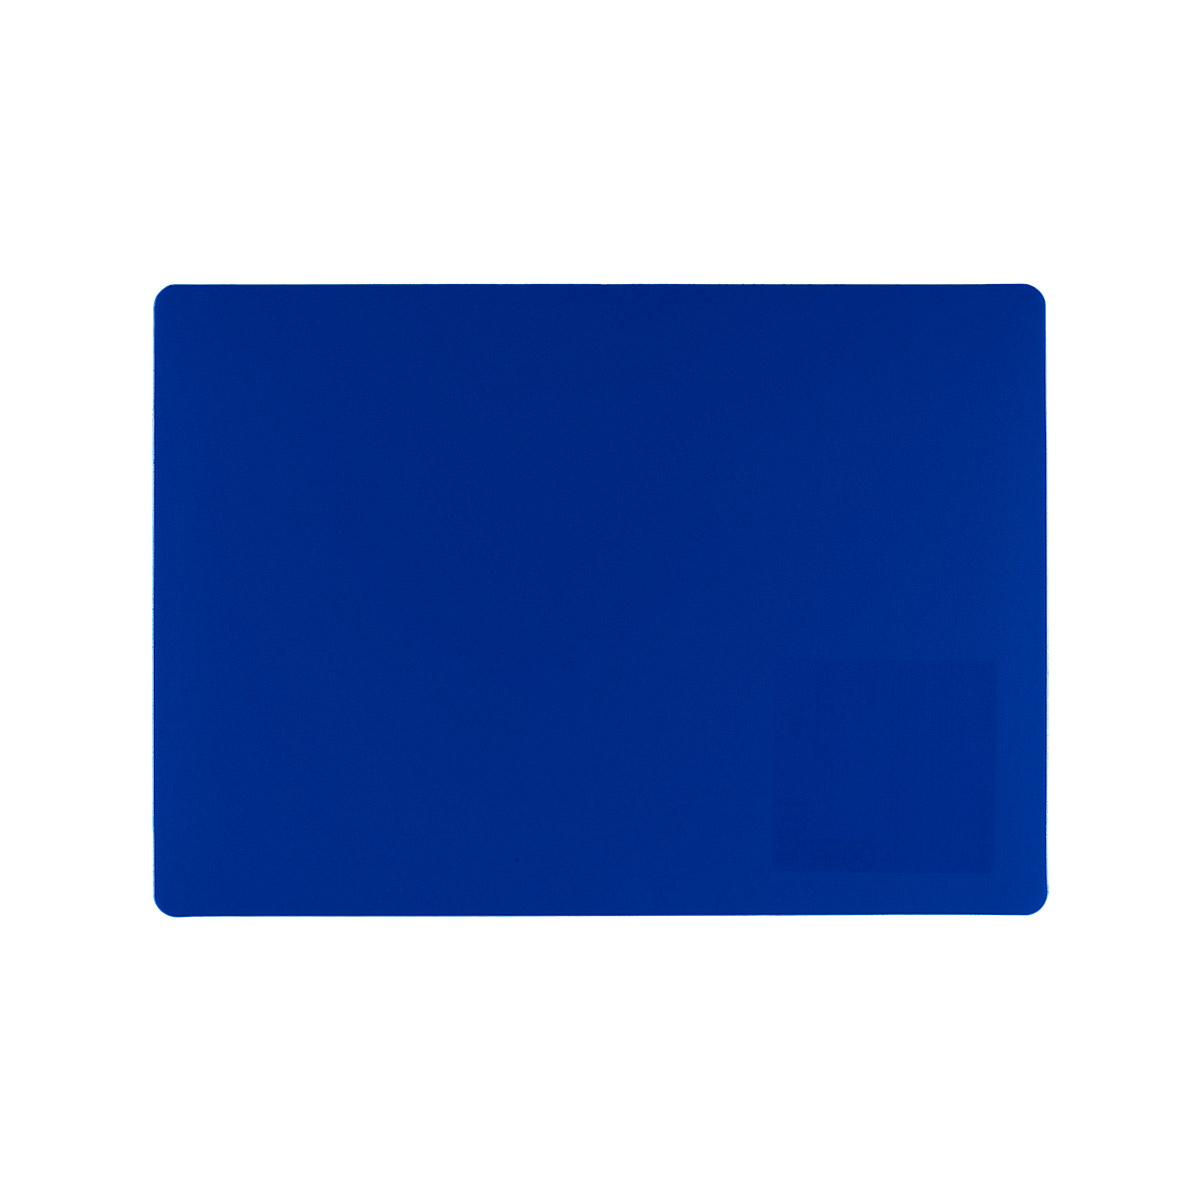 Лео Доска для лепки гибкая LPD-A5 синий Фото 1.